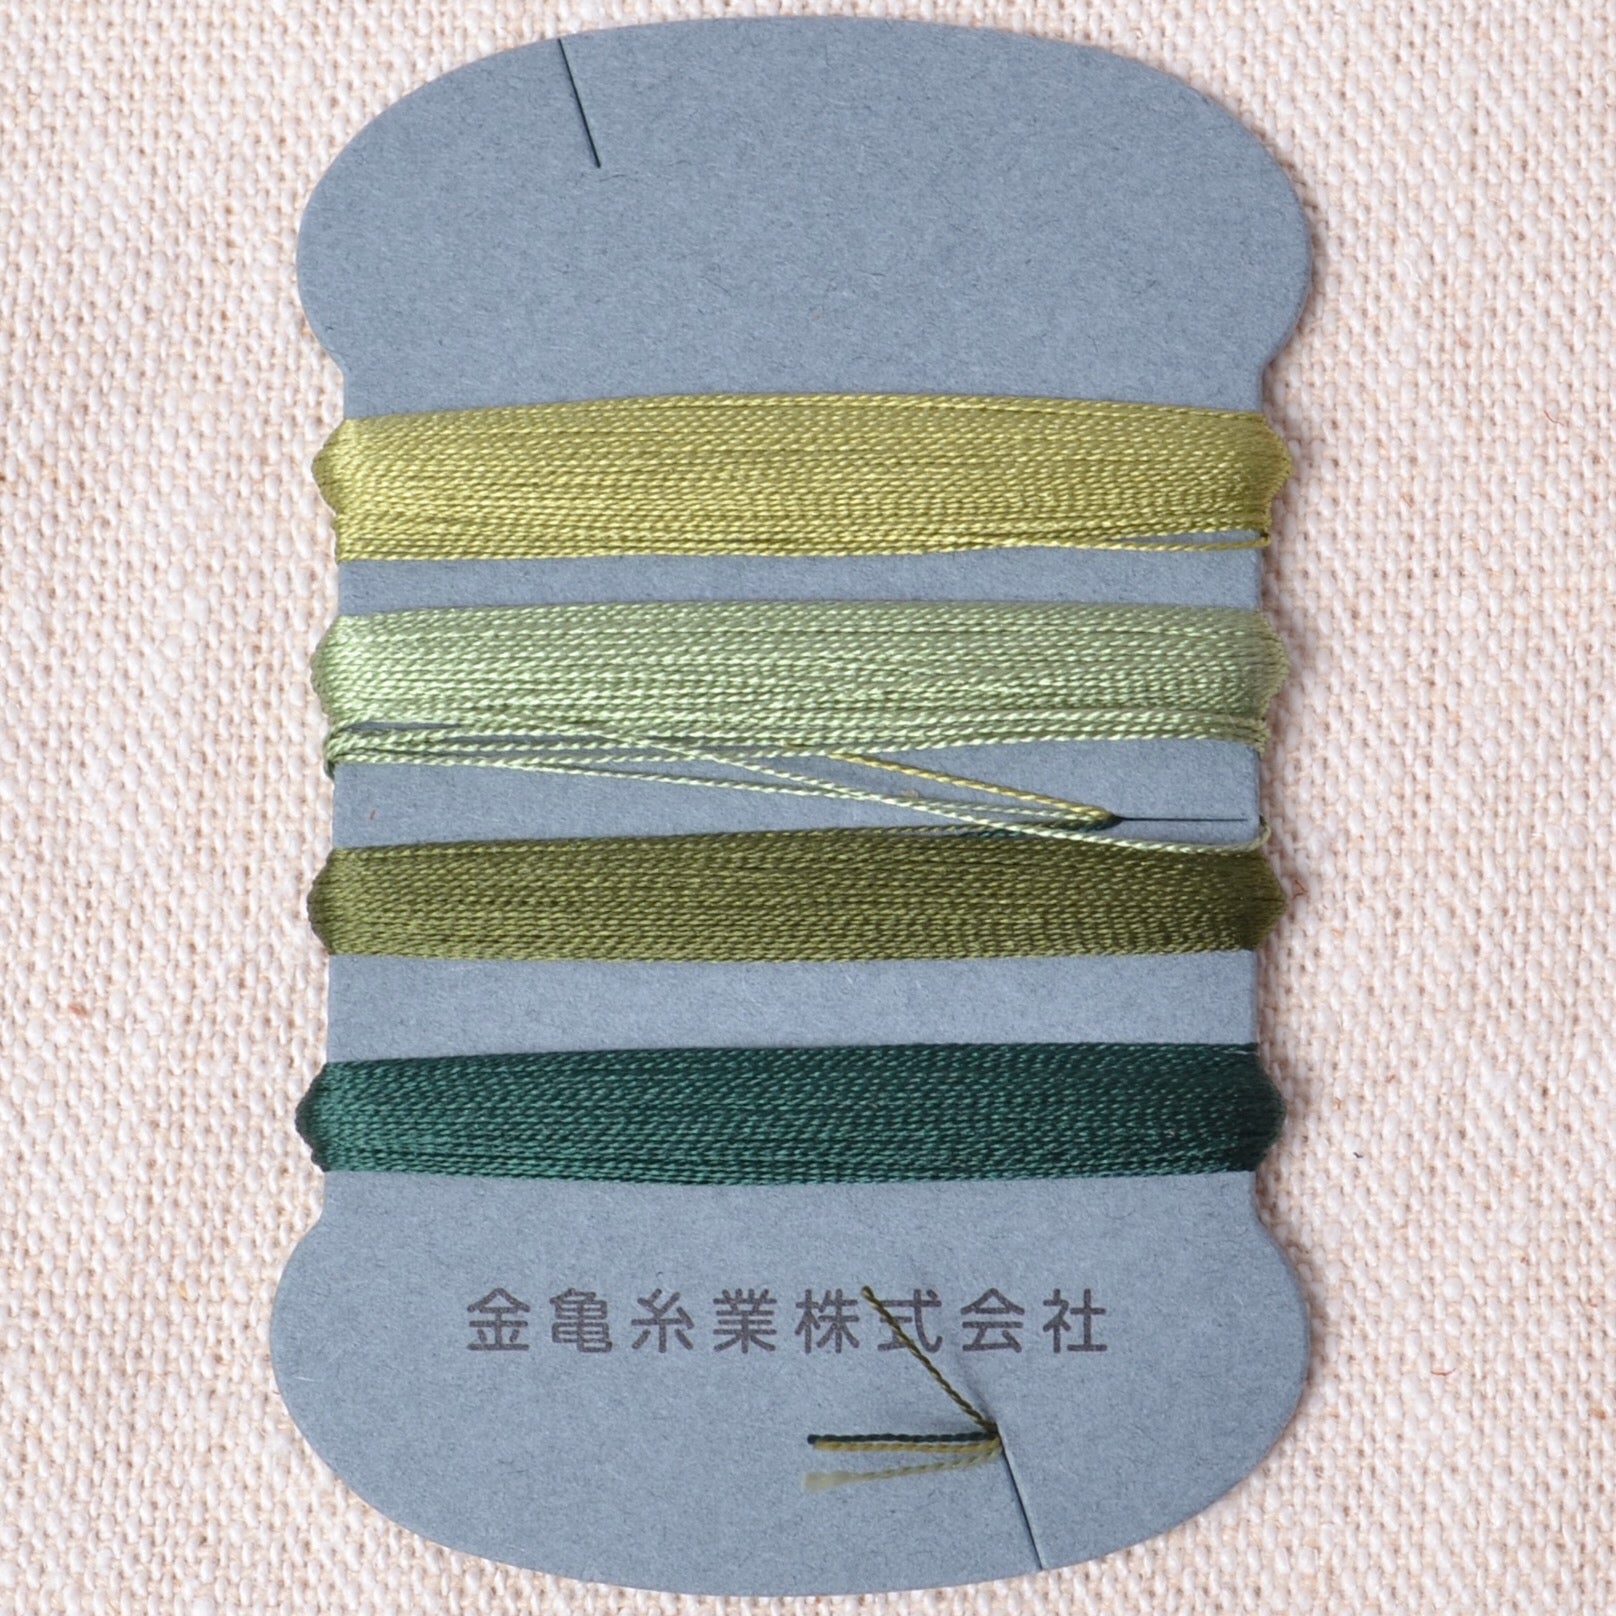 100% silk embroidery floss